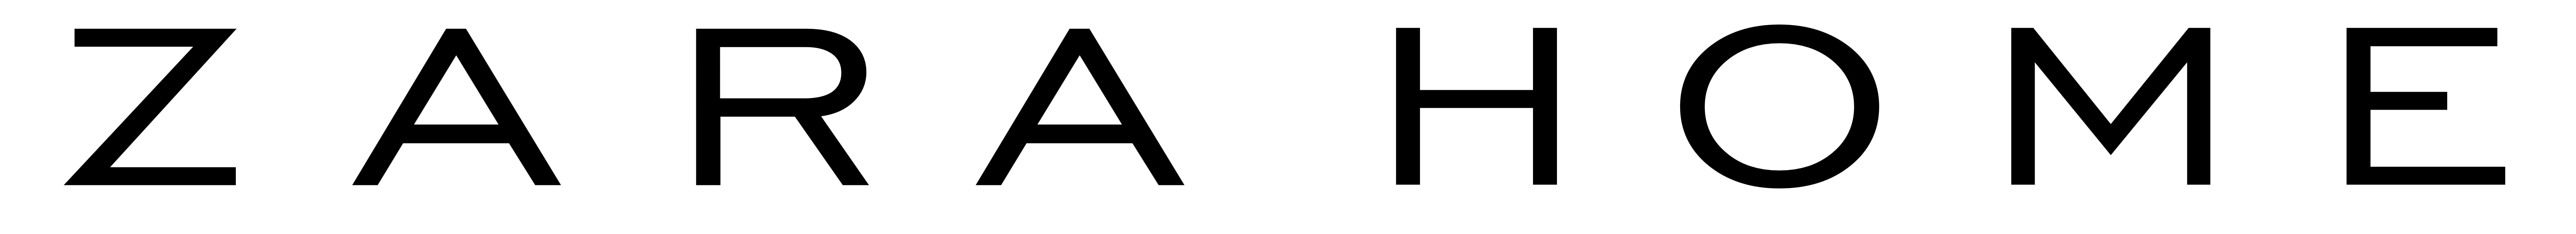 Logotipo de Zara imagen Transparente